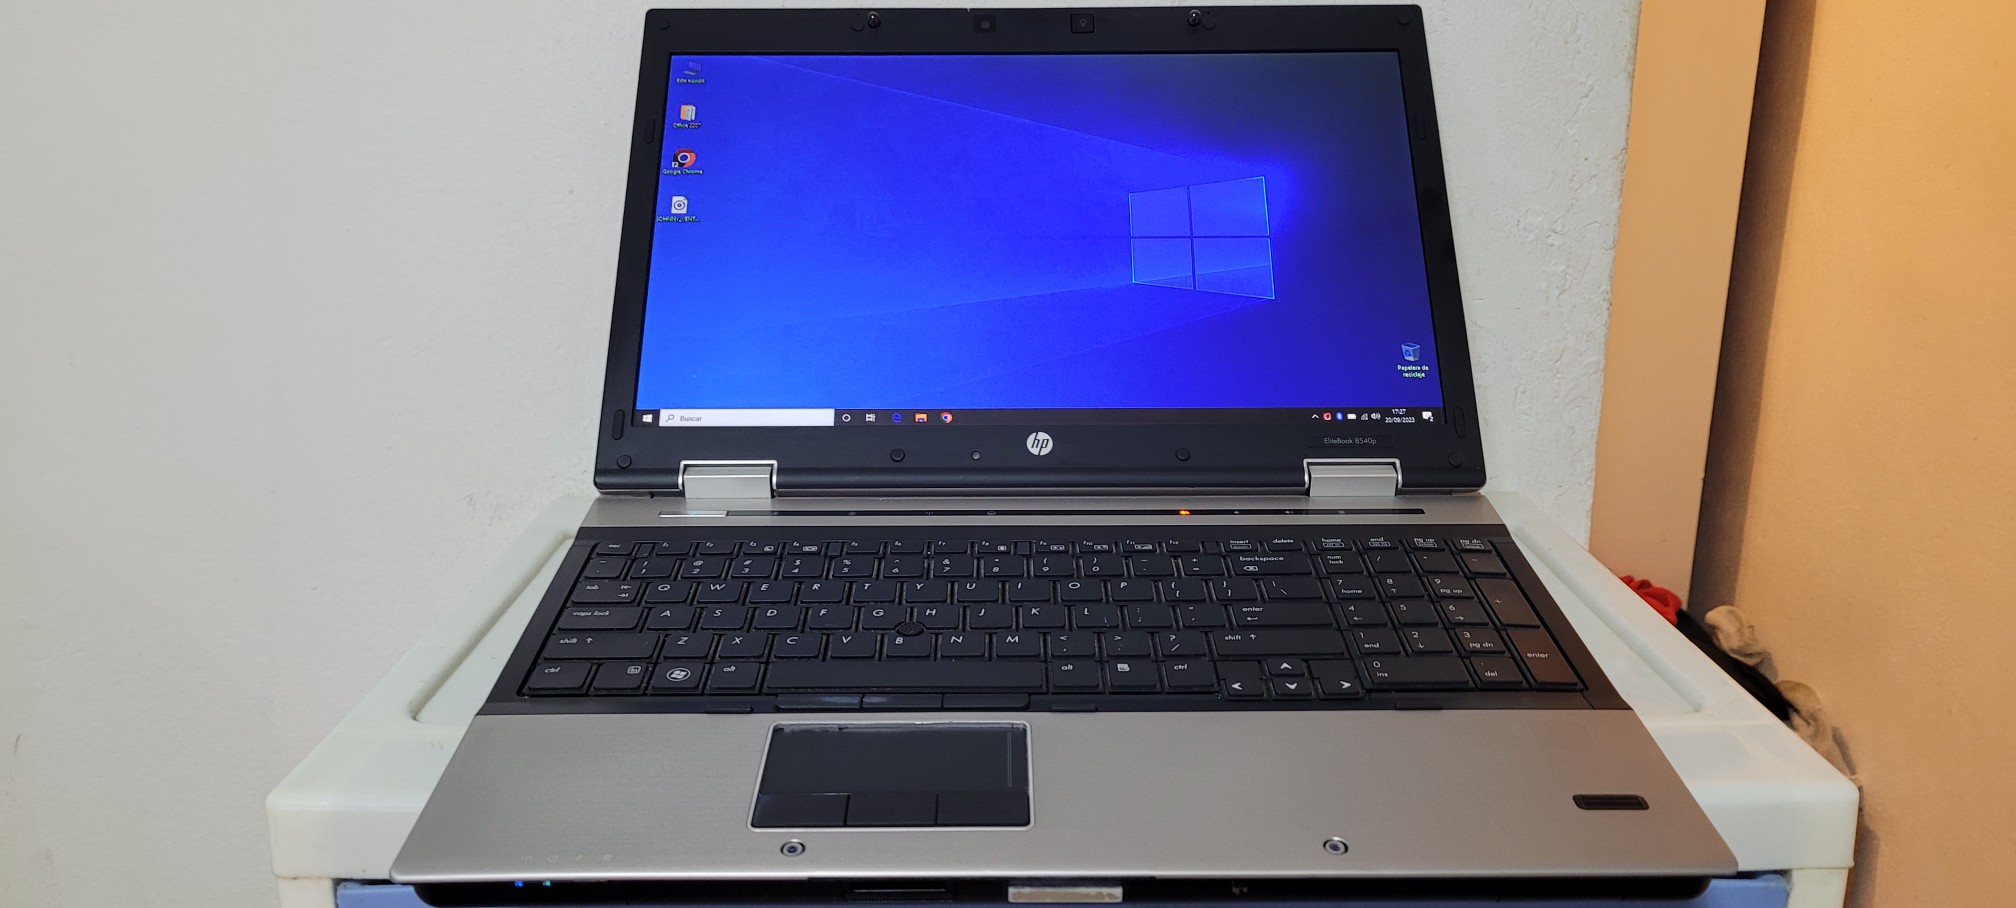 computadoras y laptops - Laptop hp 17 Pulg Core i7 Ram 8gb Disco SSD 128GB Nvidea 4gb Disponible 0